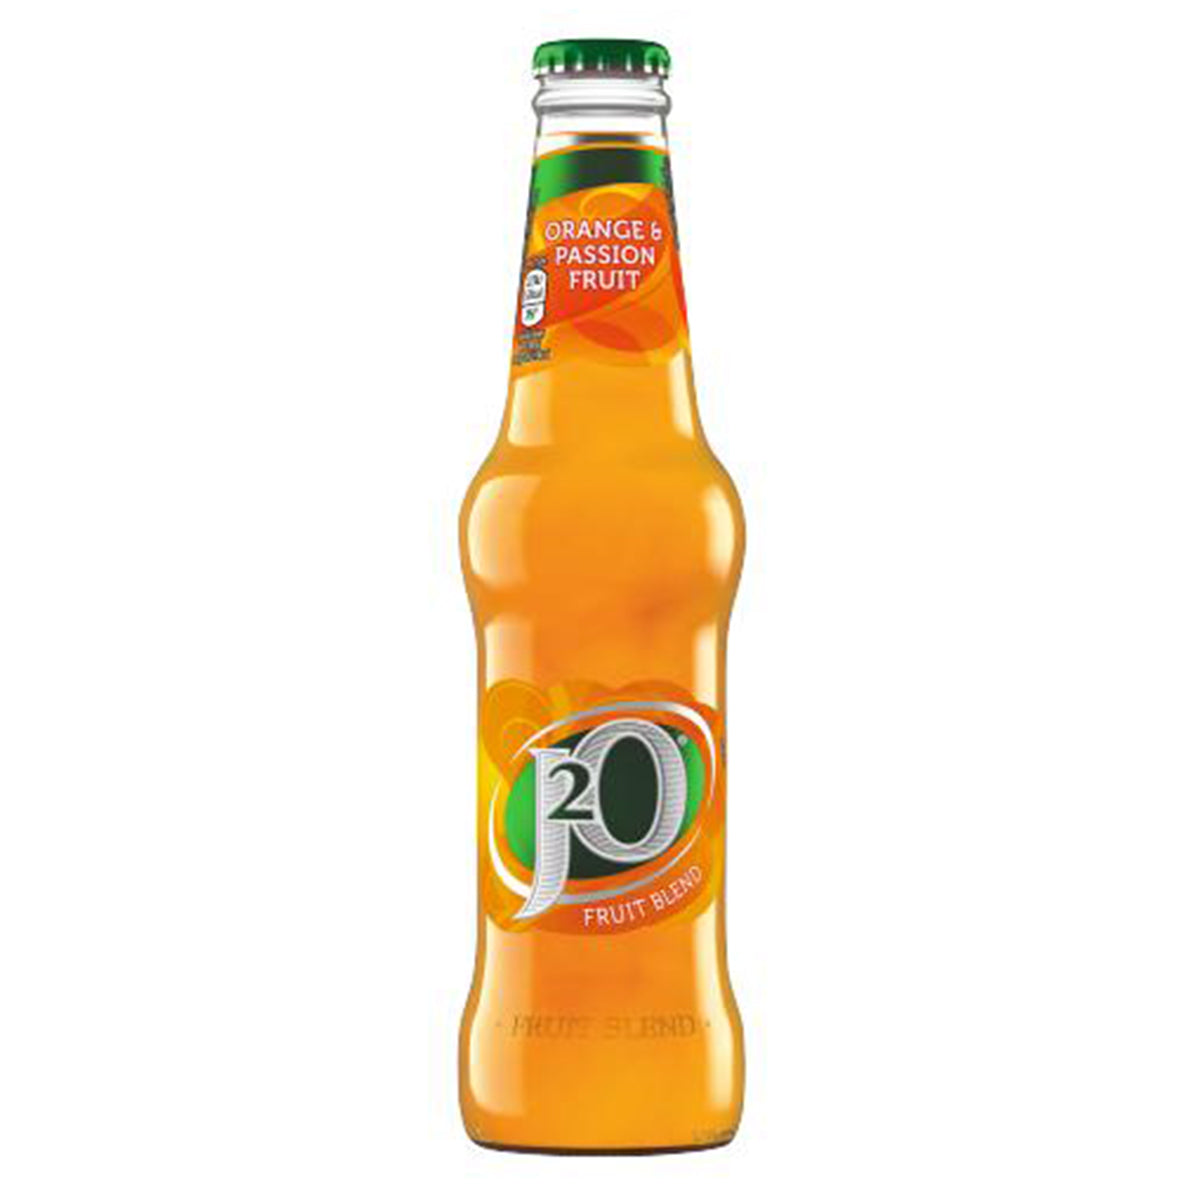 A bottle of J2O - Orange & Passion Fruit - 275ml on a white background.